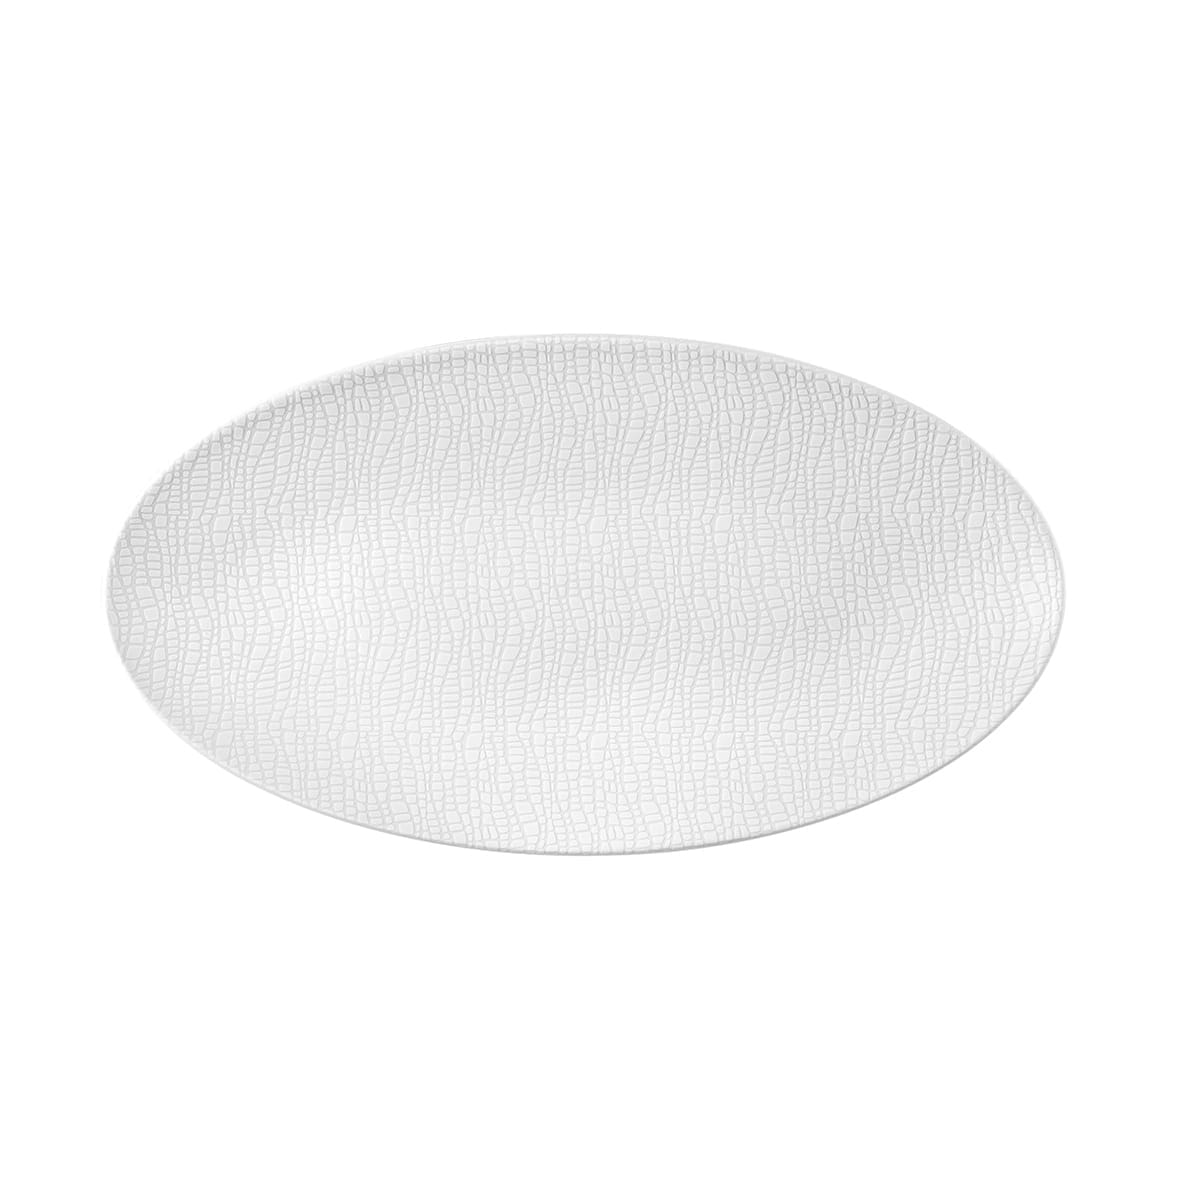 Seltmann Porzellan Life Fashion luxury white Servierplatte oval 33x18 cm